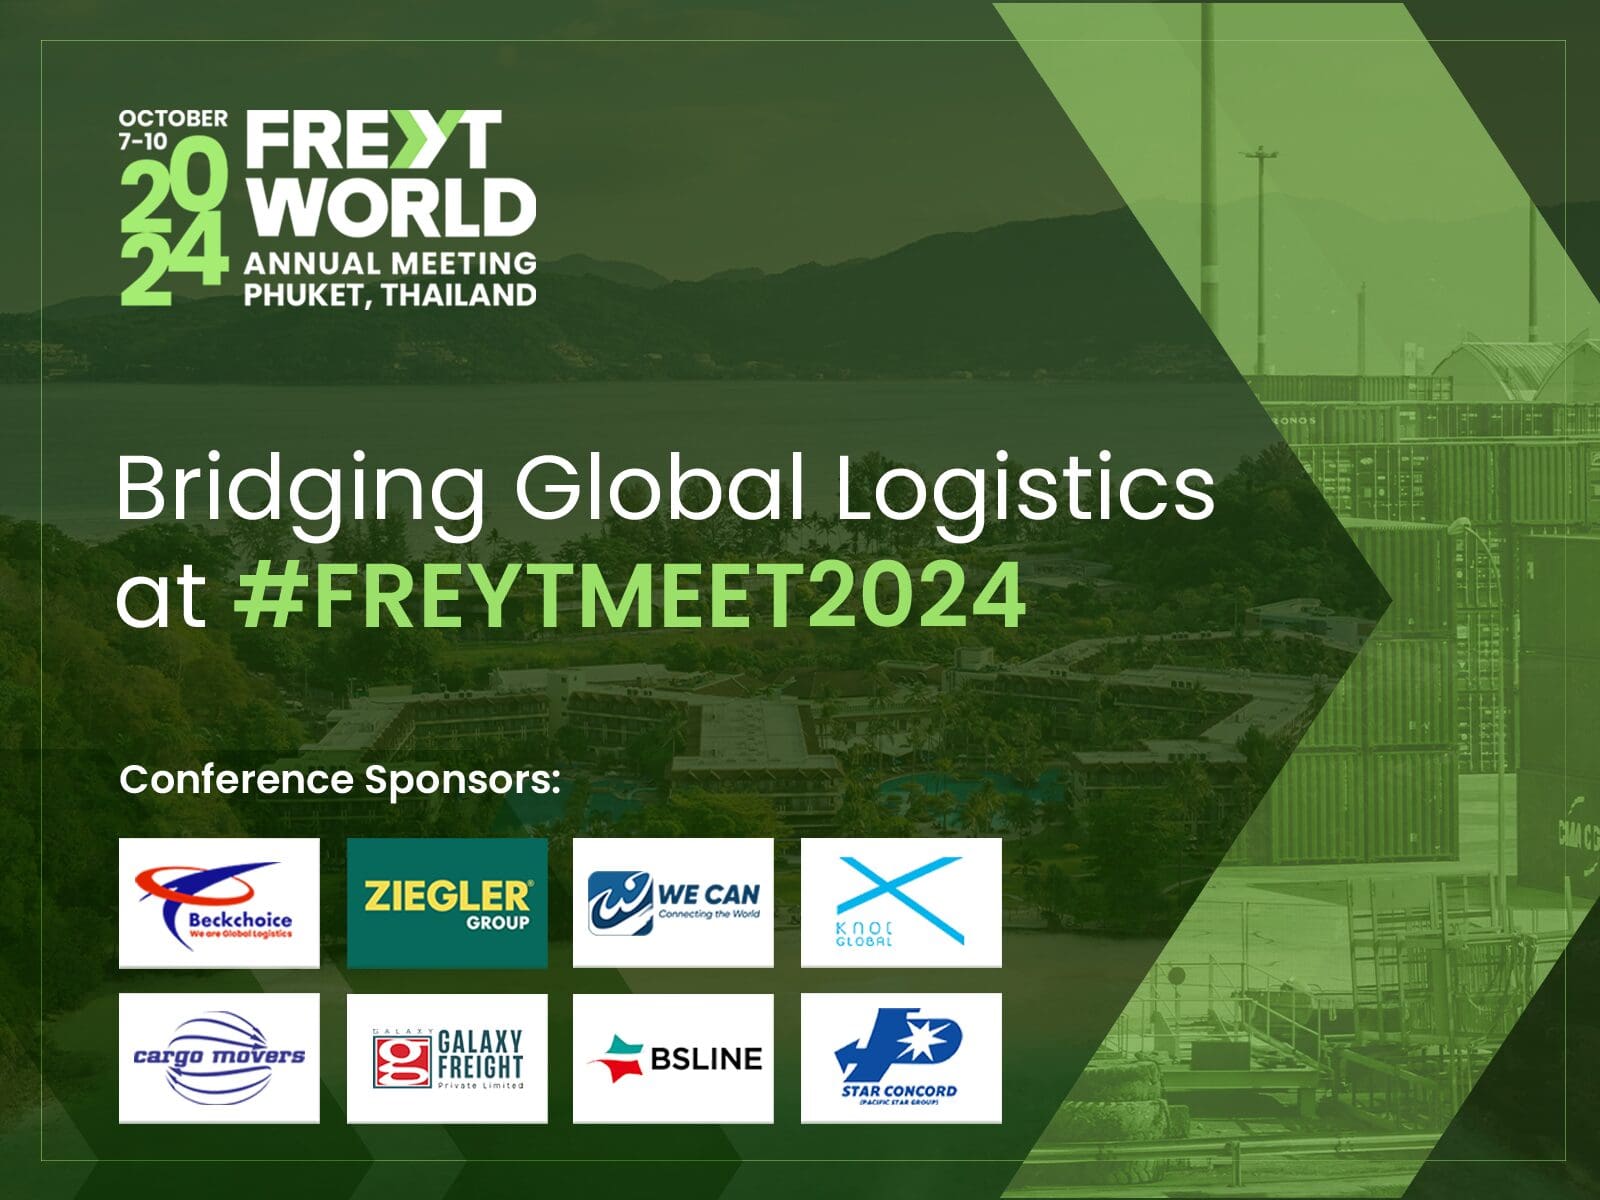 Bridging Global Logistics at #FreytMeet2024